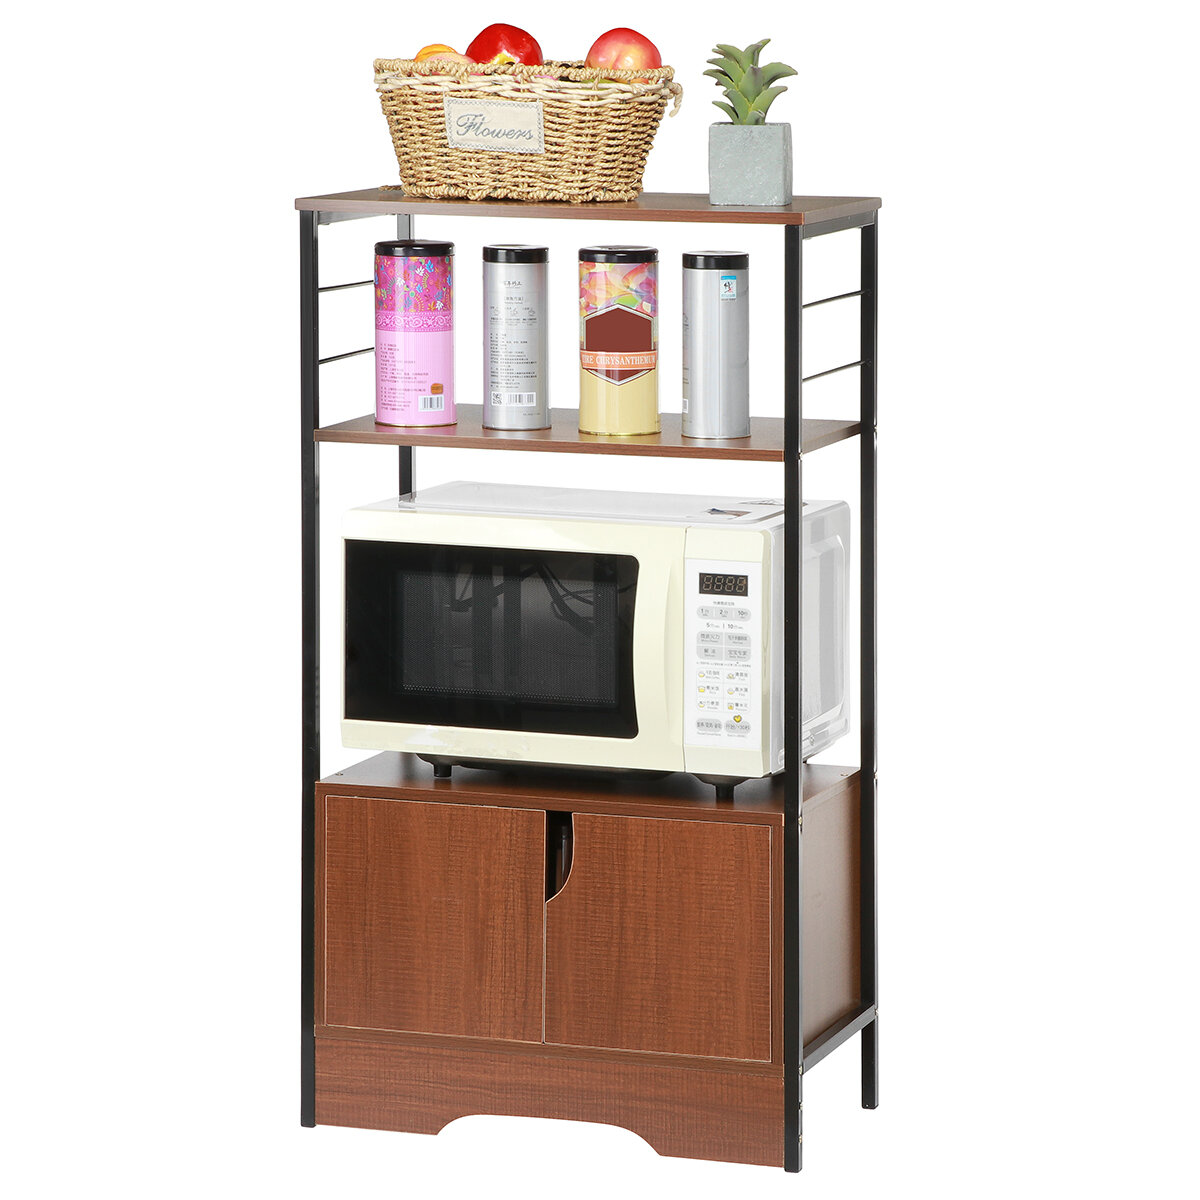 Image of 2/3 Tiers Microwave Oven Rack Kitchen Storage Shelf Space Saving Cupboard Rack Storage Cabinet